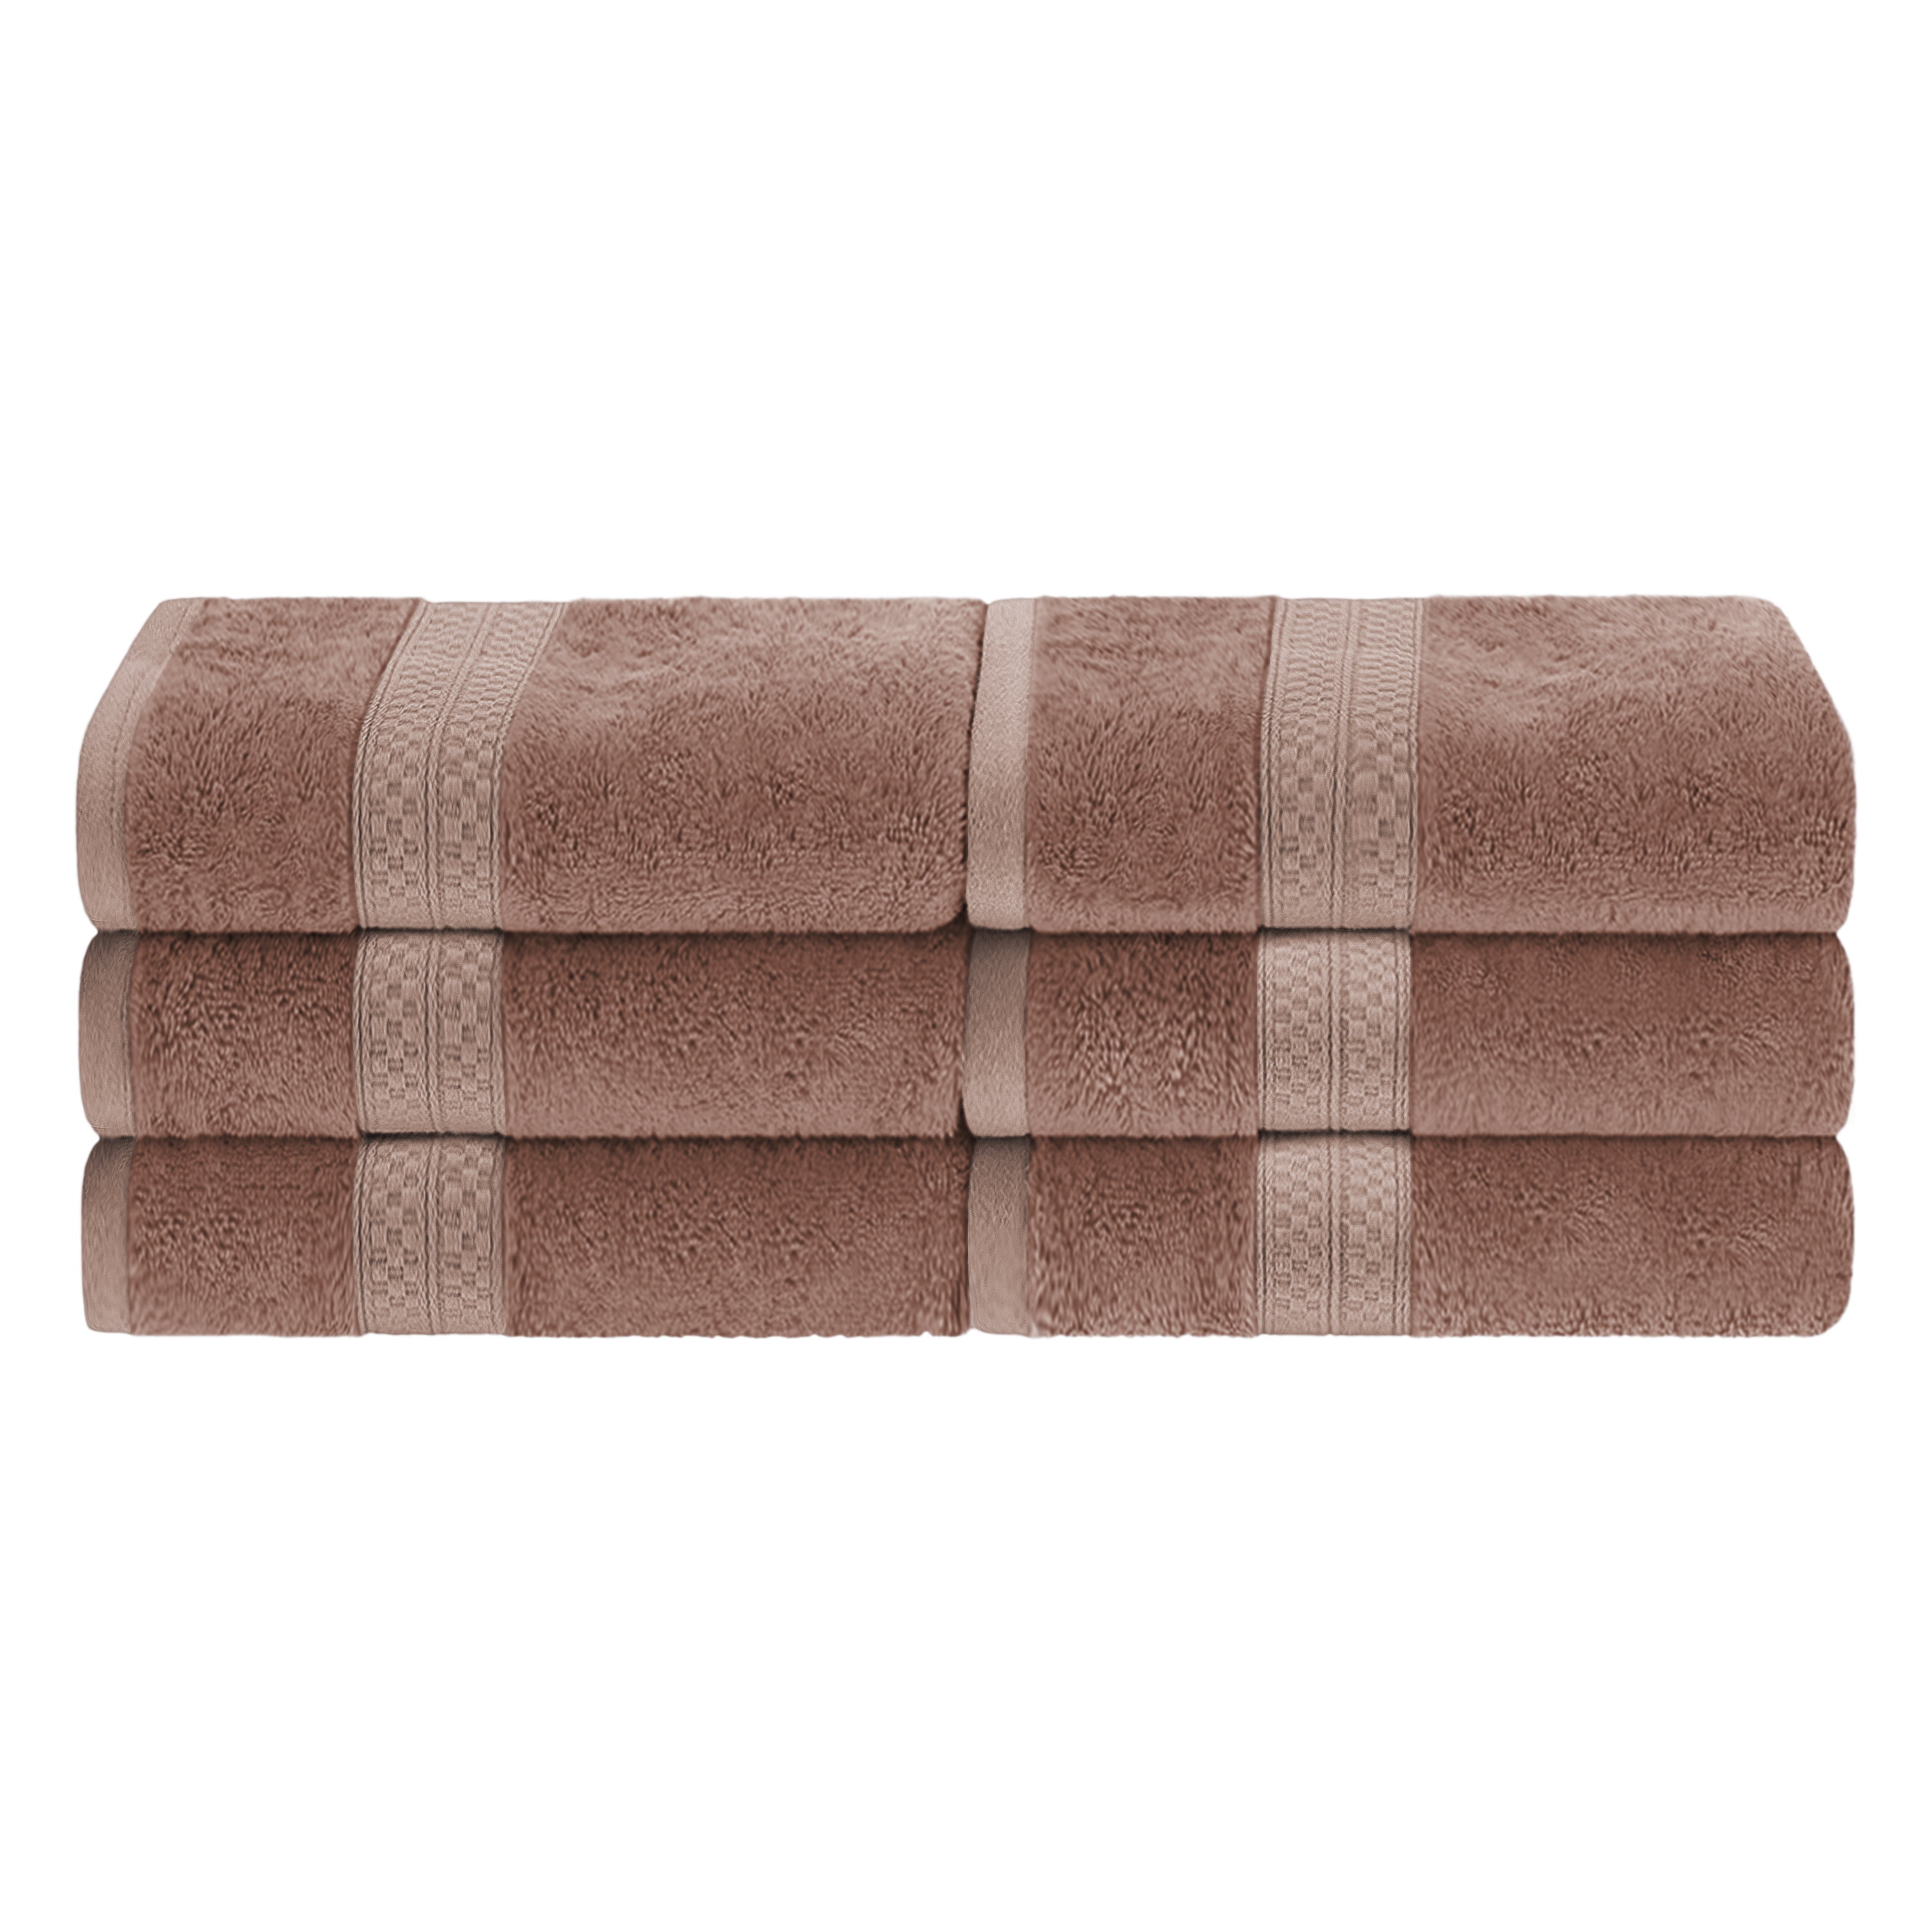 Bamboo Mélange Bath Sheets & Hand Towels